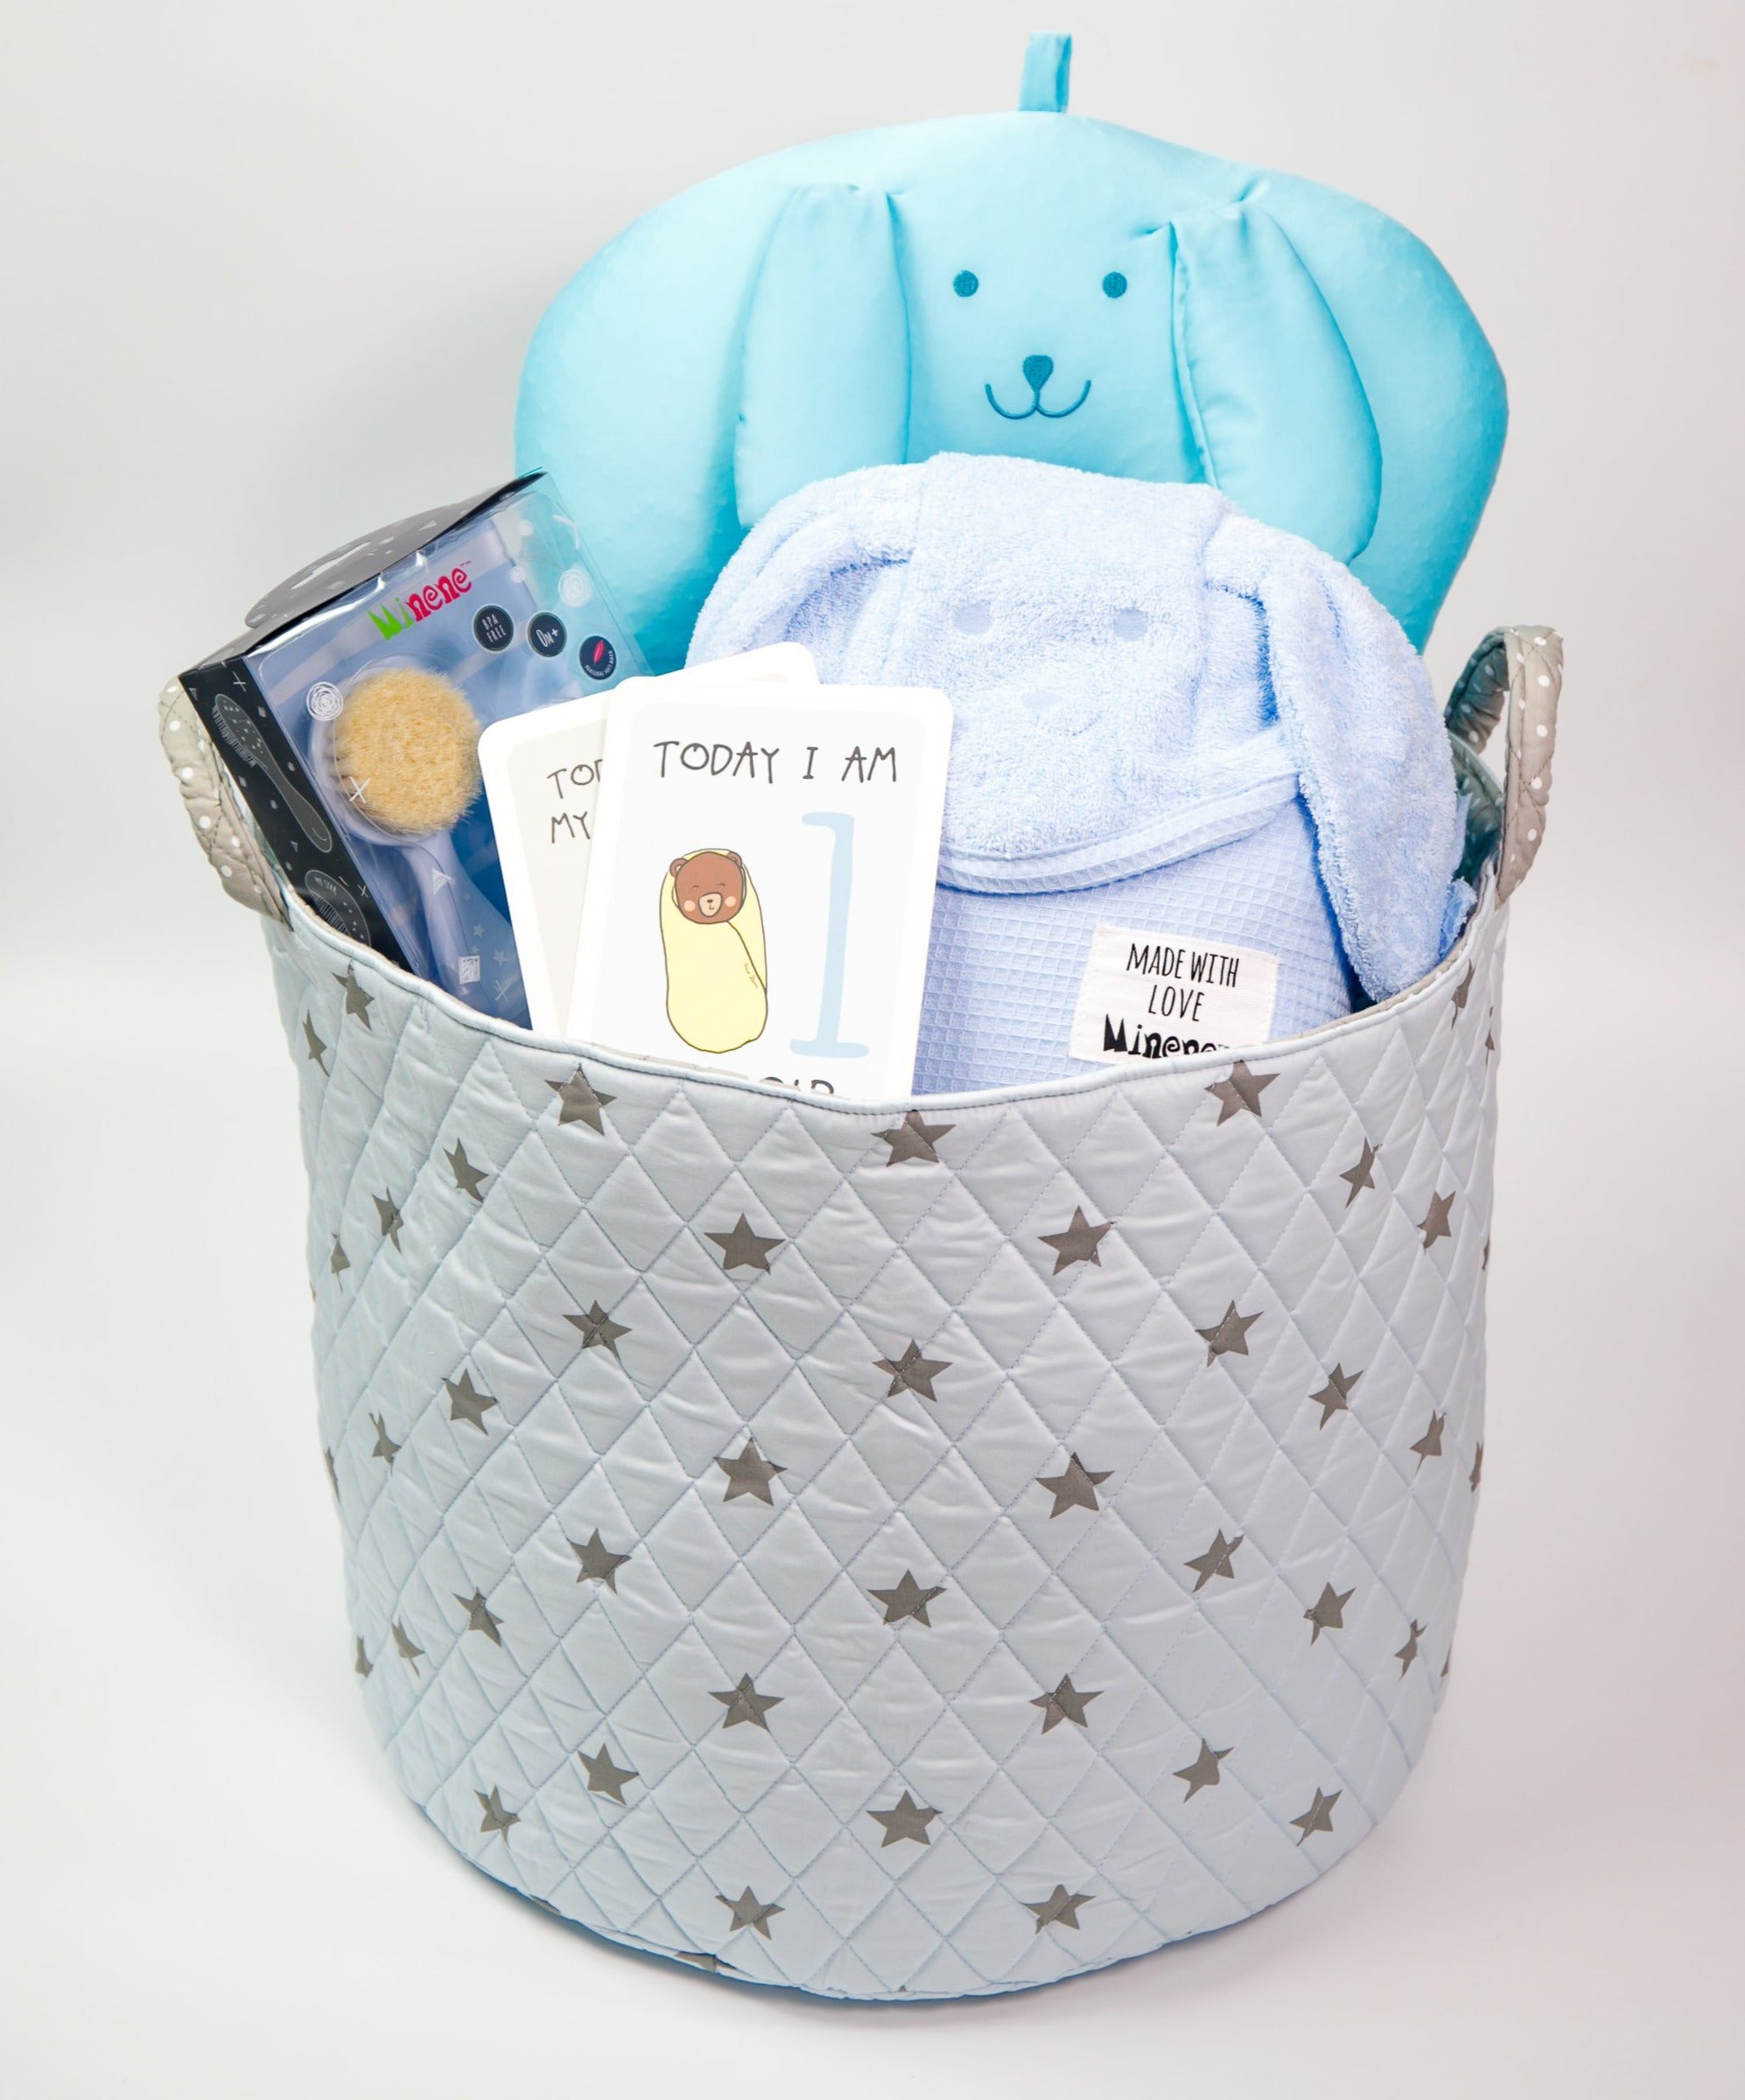 Baby Bath Gift Basket - Blue Dog !